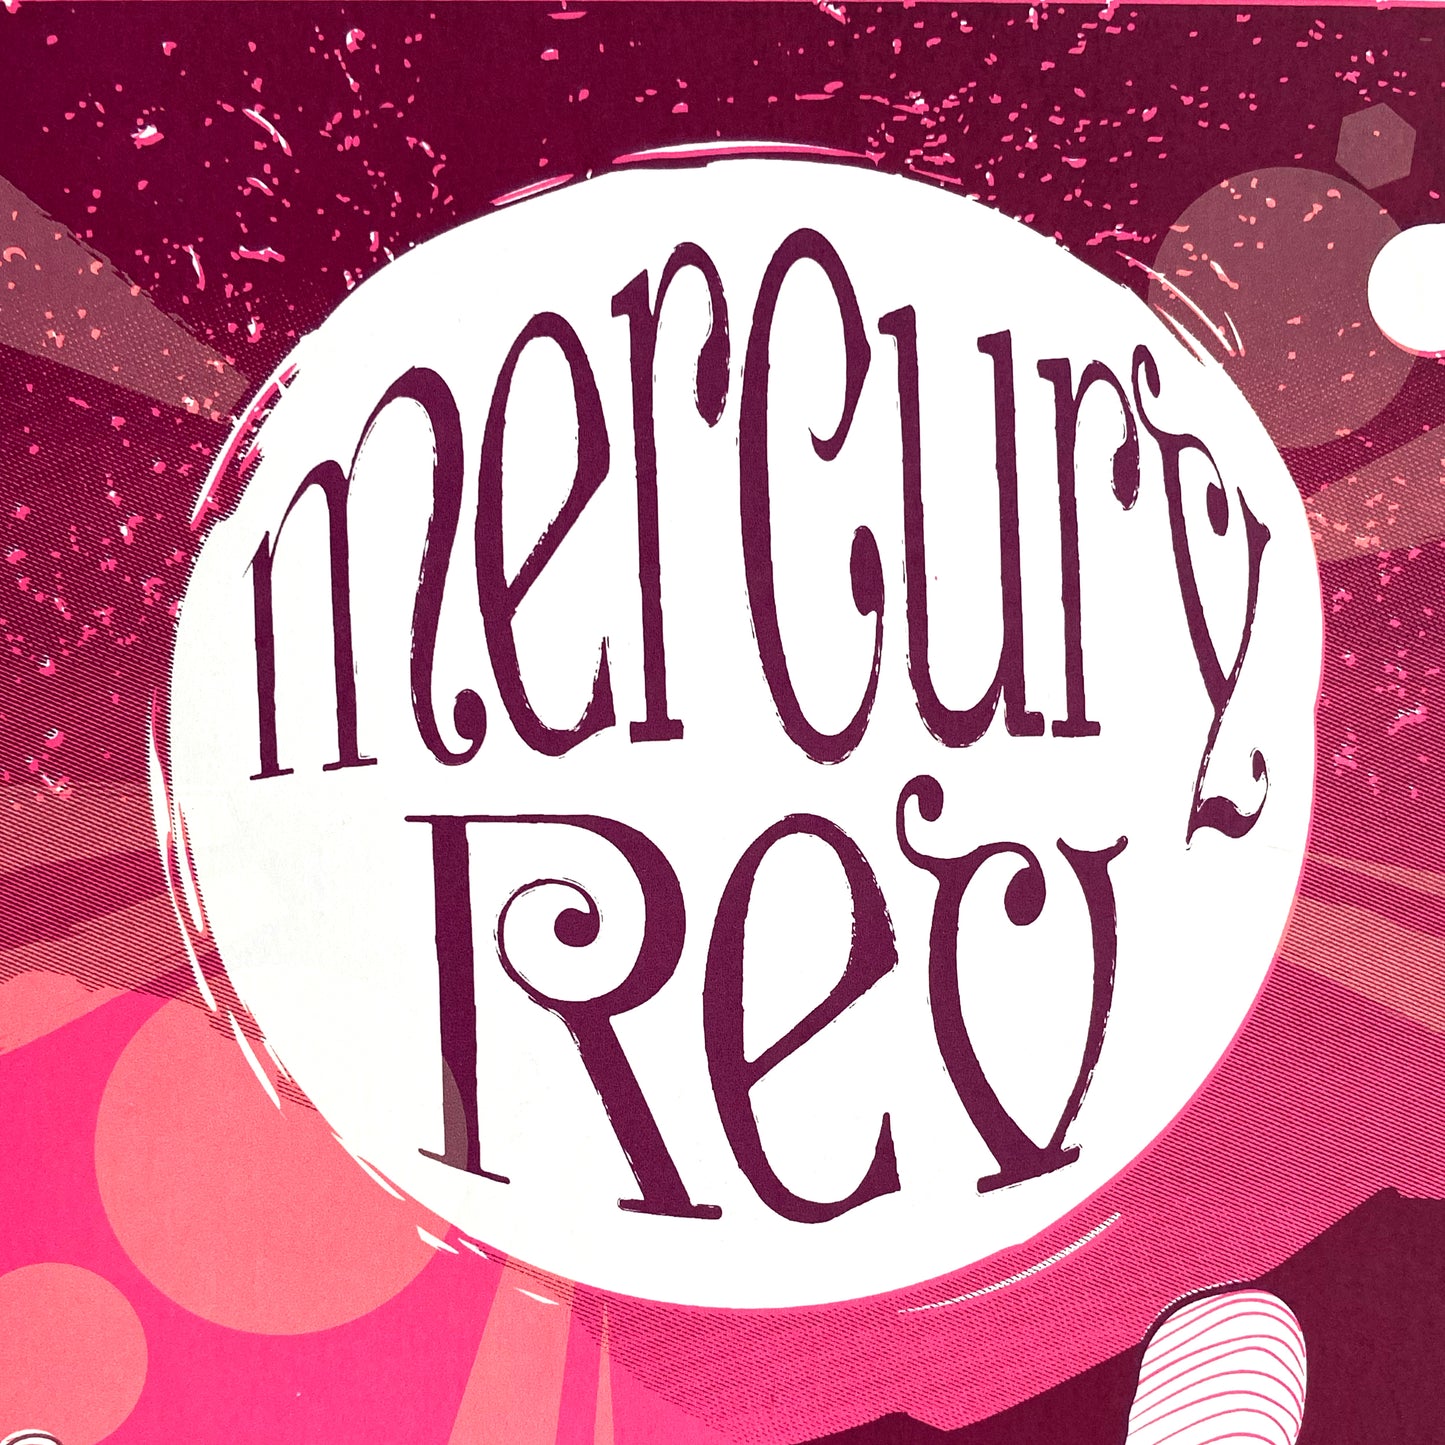 Mercury Rev - Manchester 2015